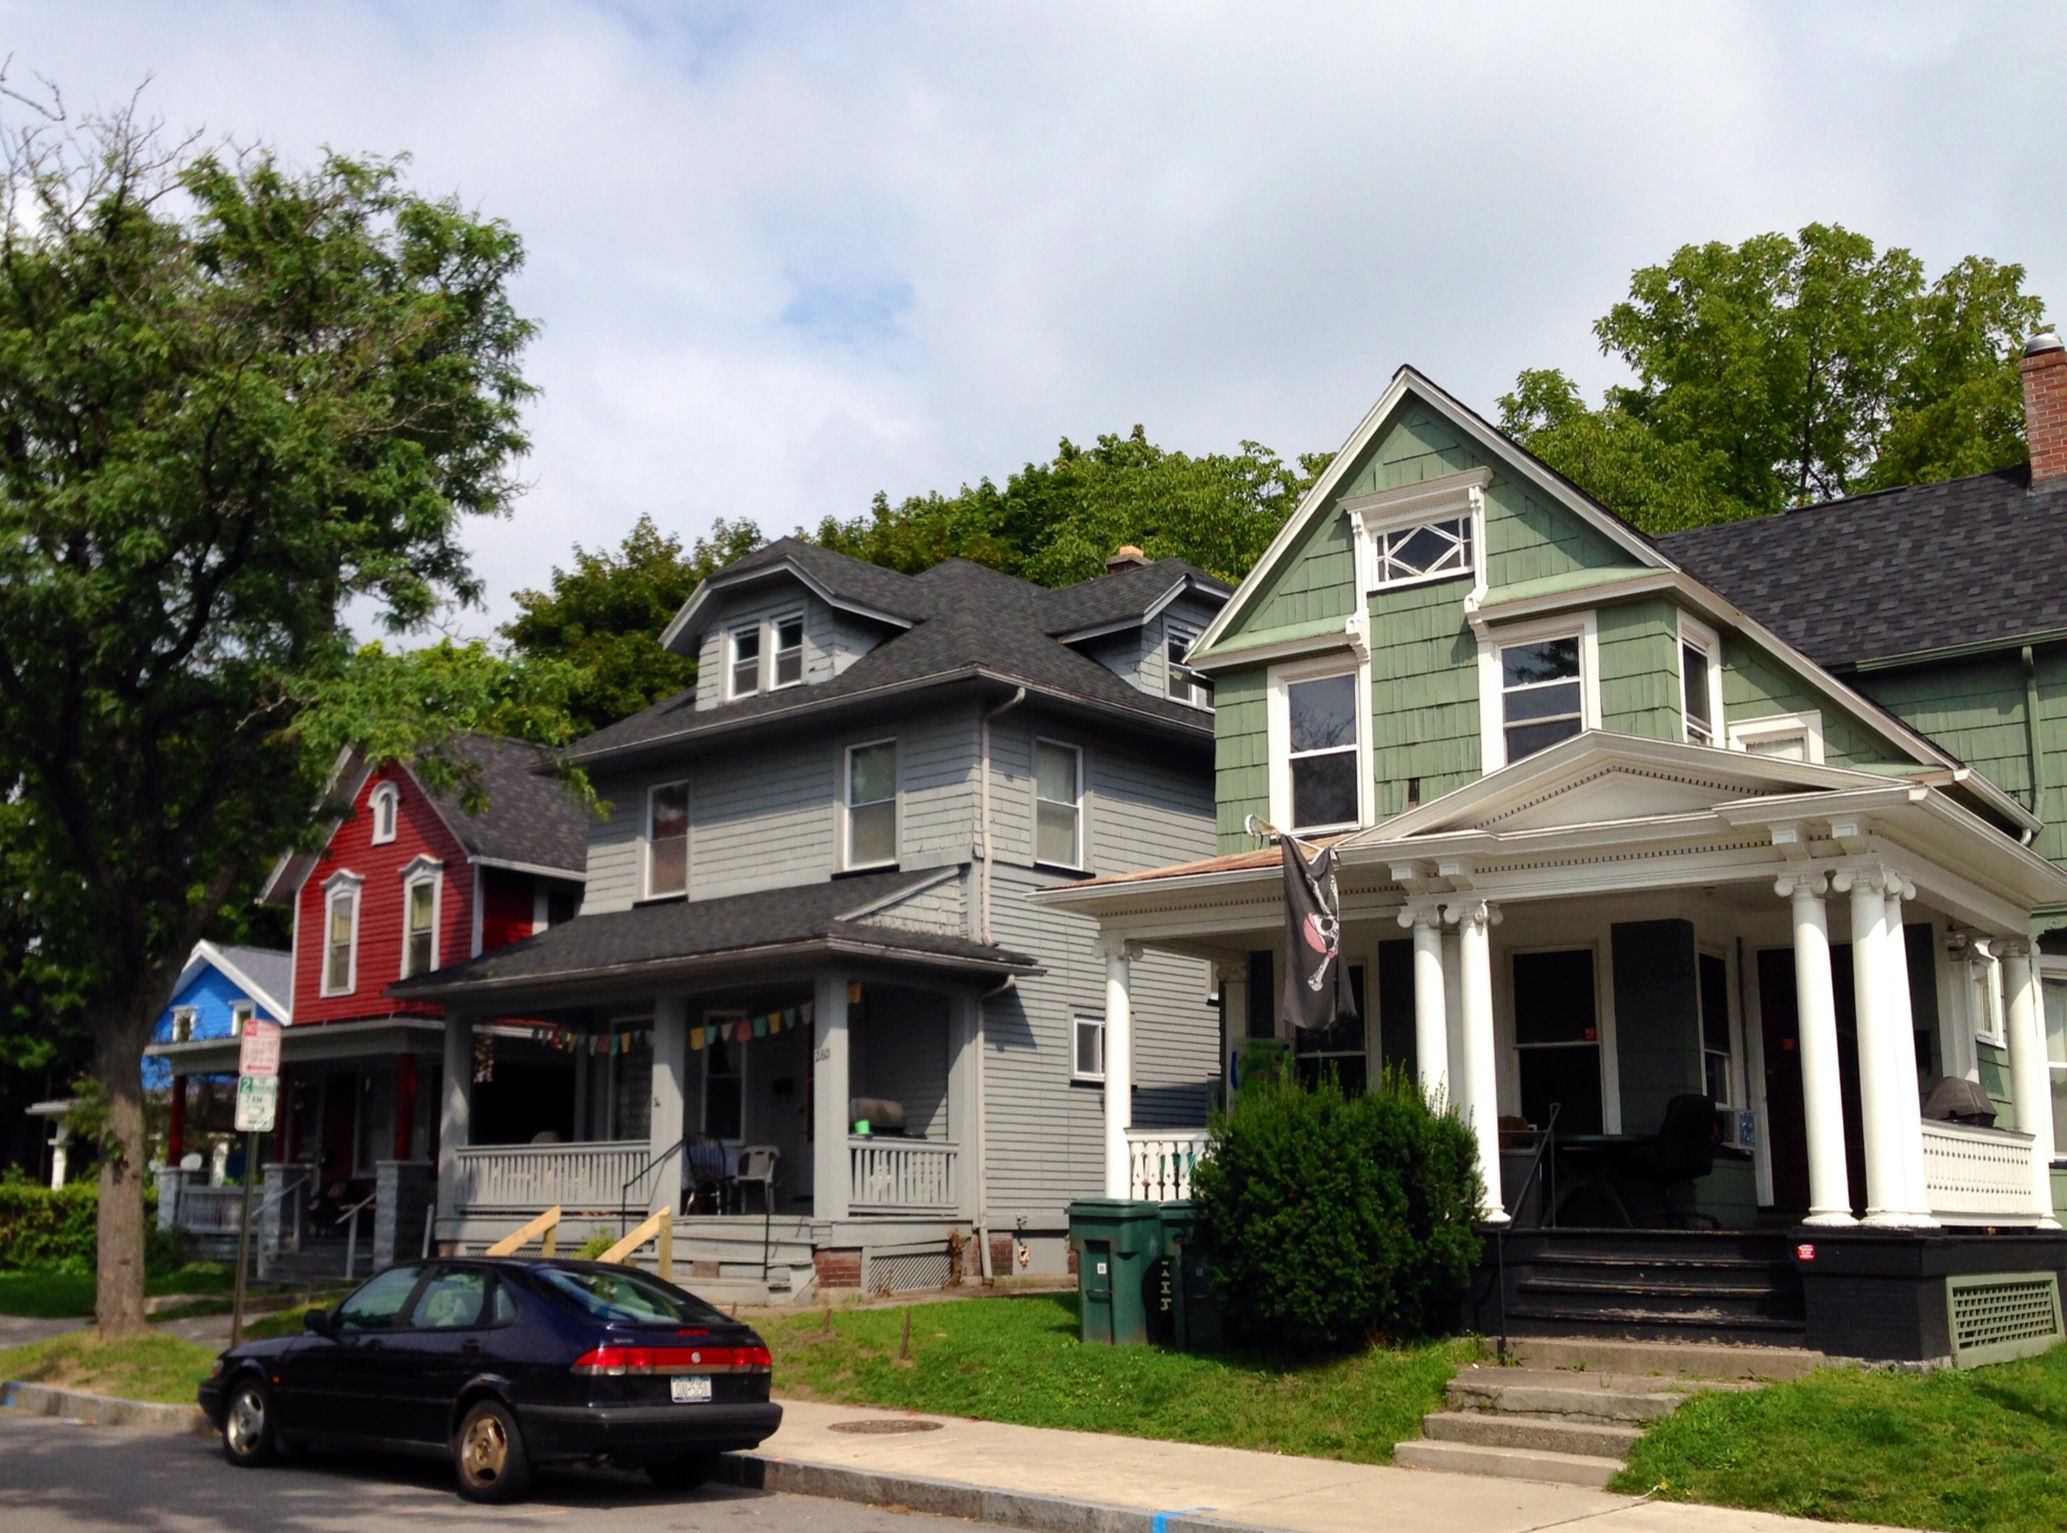 Homes in revitalized South Wedge - Rochester NY - Credit Chelsea Allinger Center for Community Progress-2014